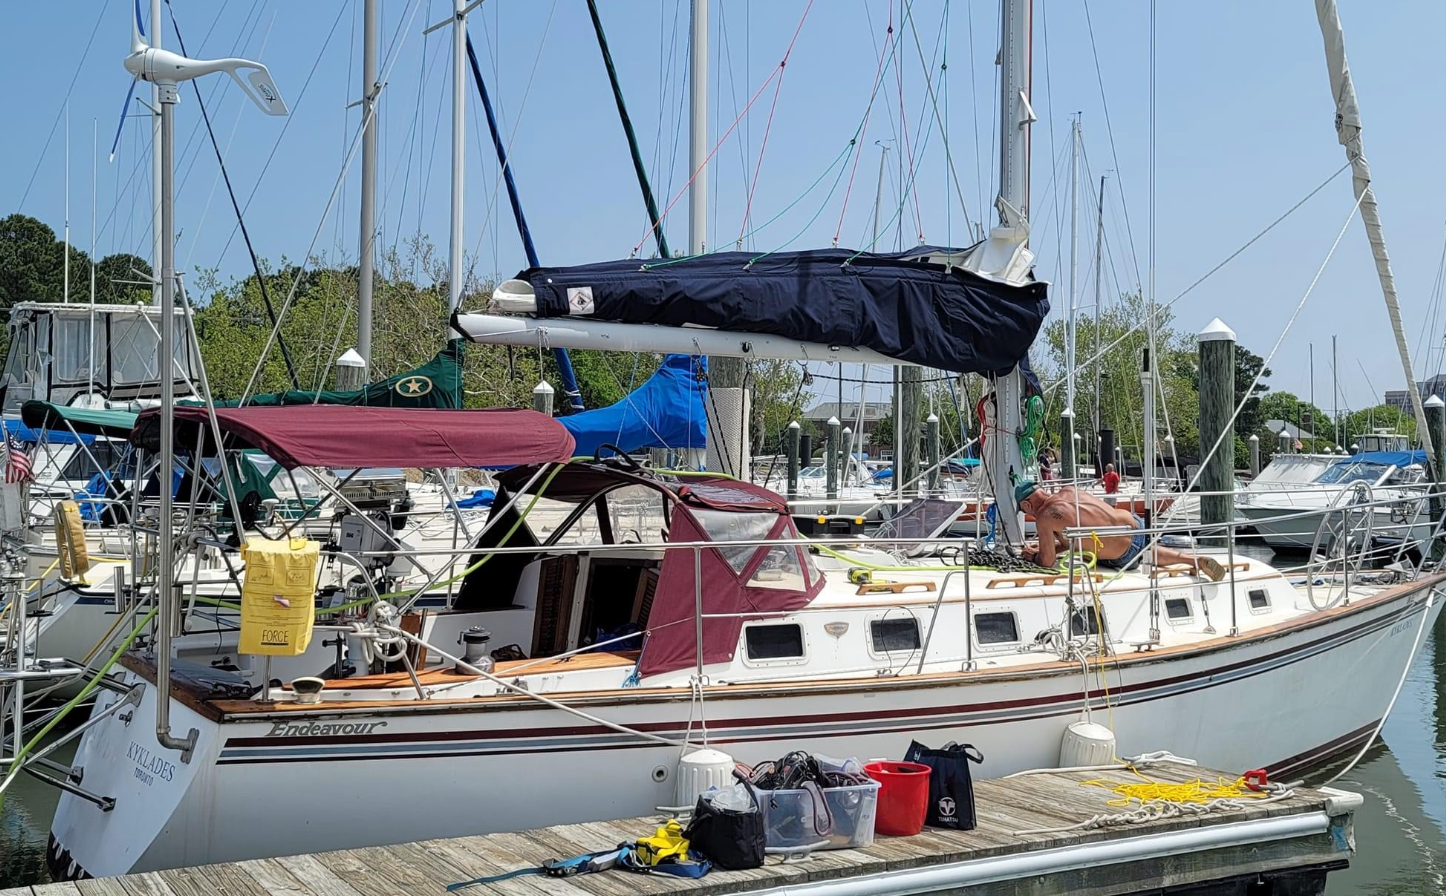 sailboat Kyklades, Endeavor 40' sailboat